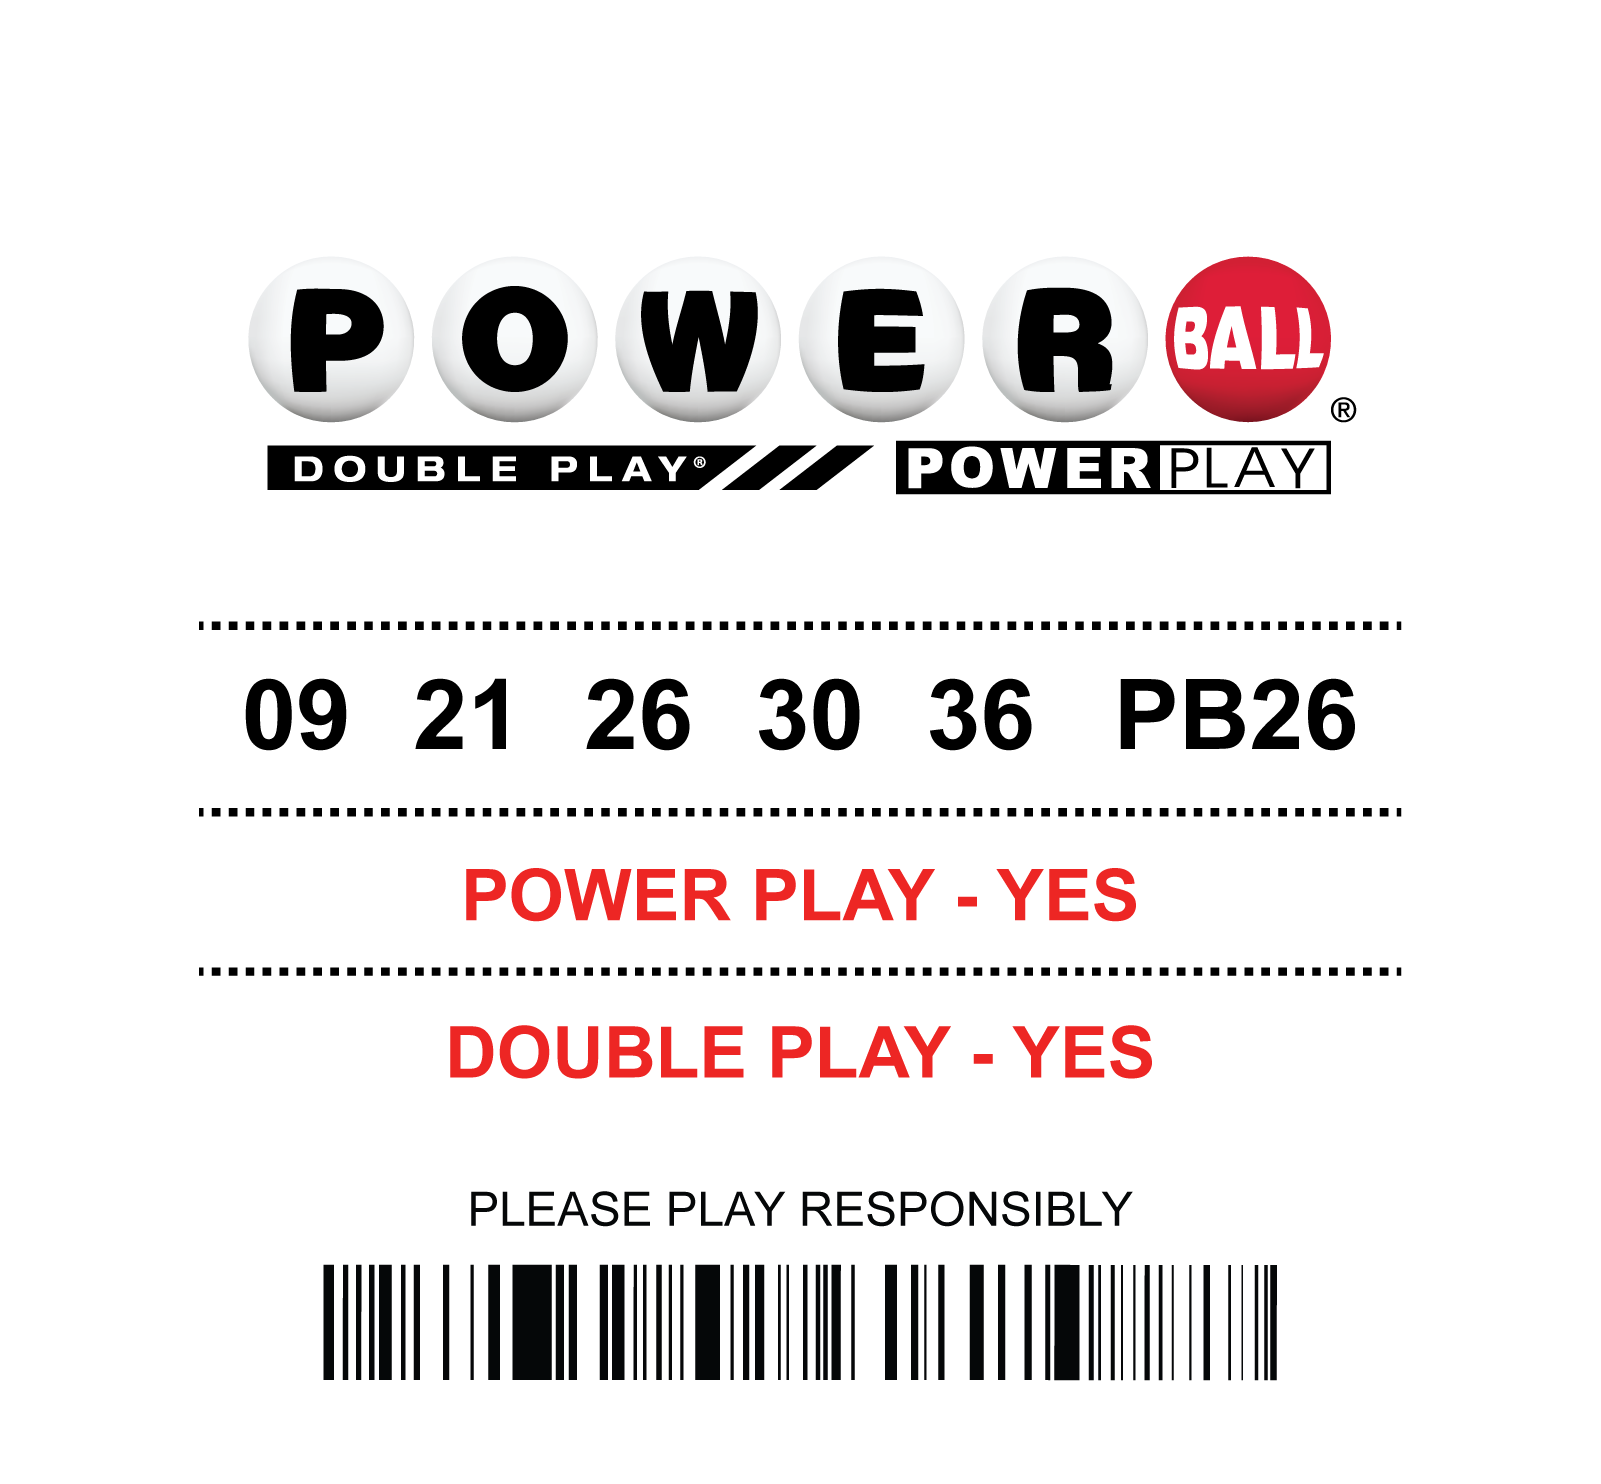 powerball winning ticket